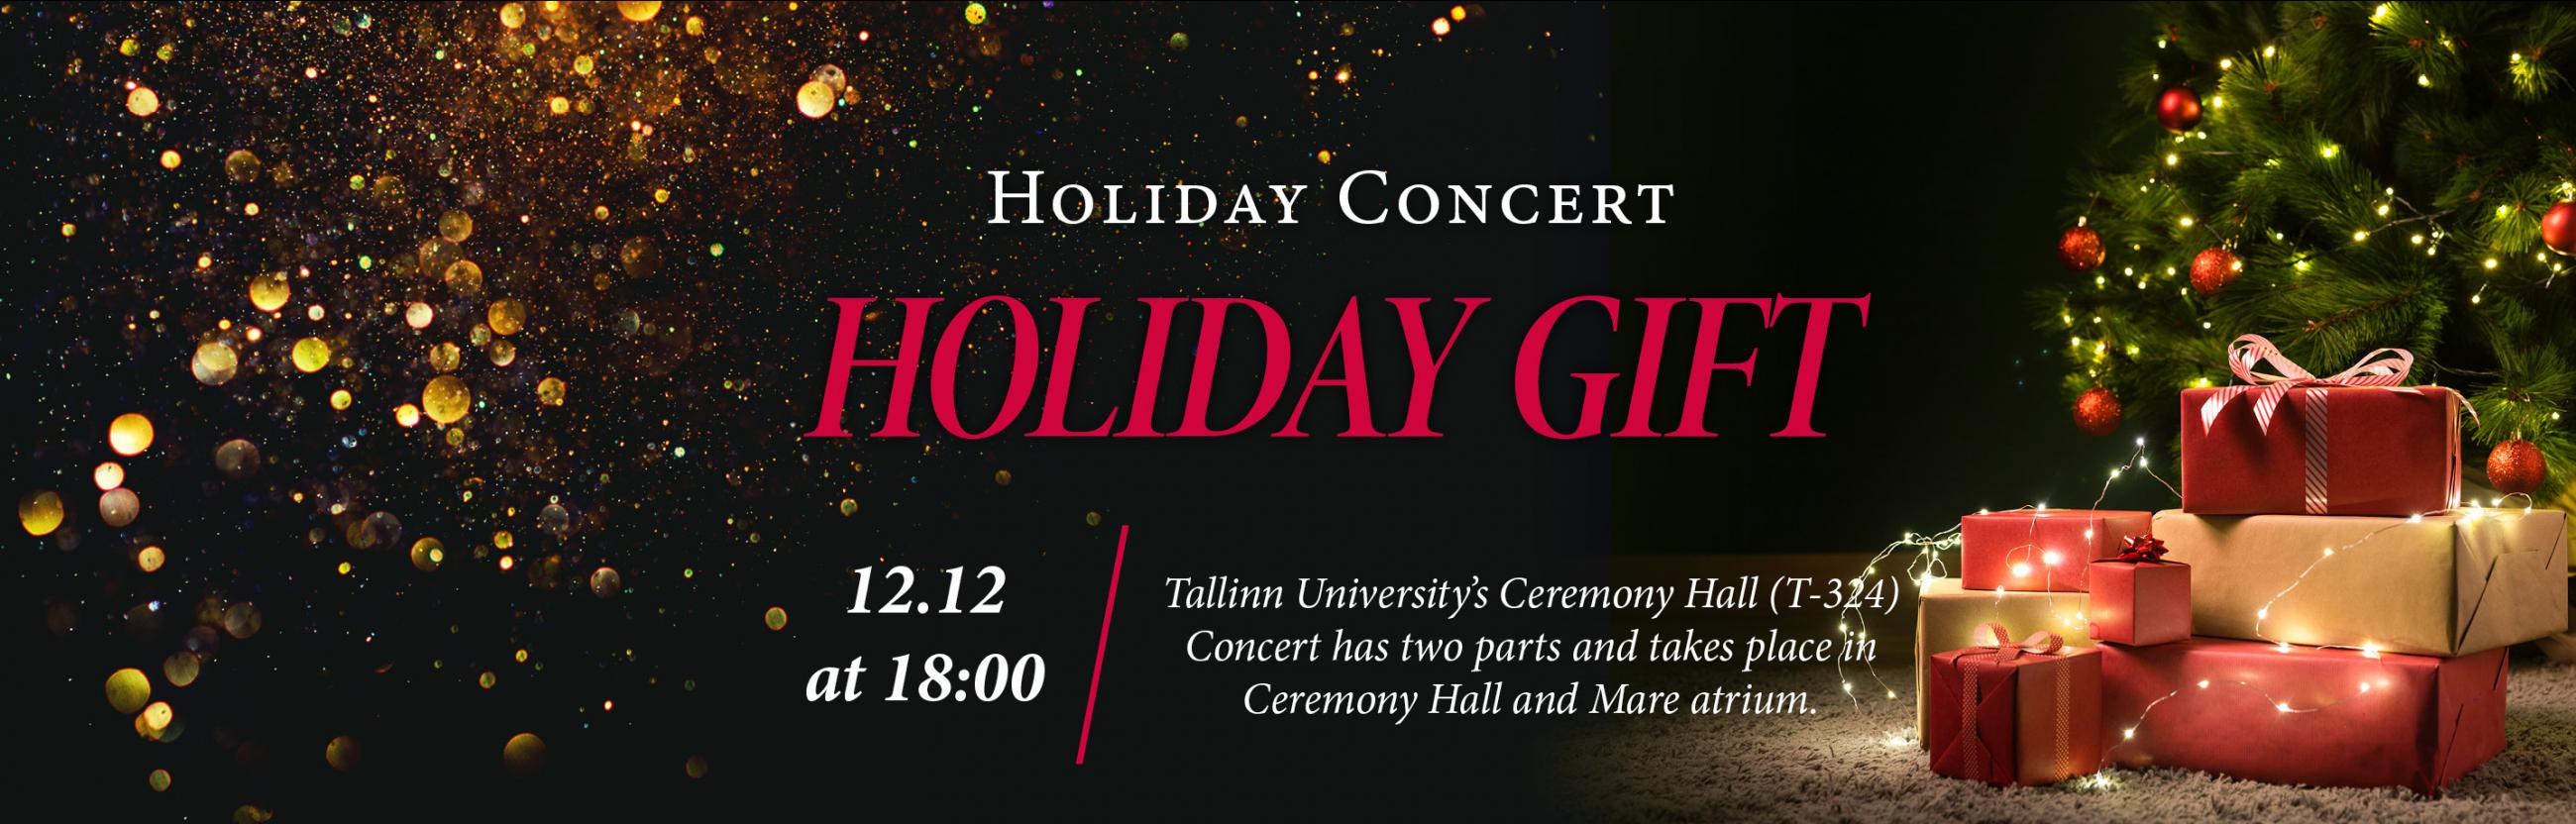 Tallinn University Holiday Concert banner